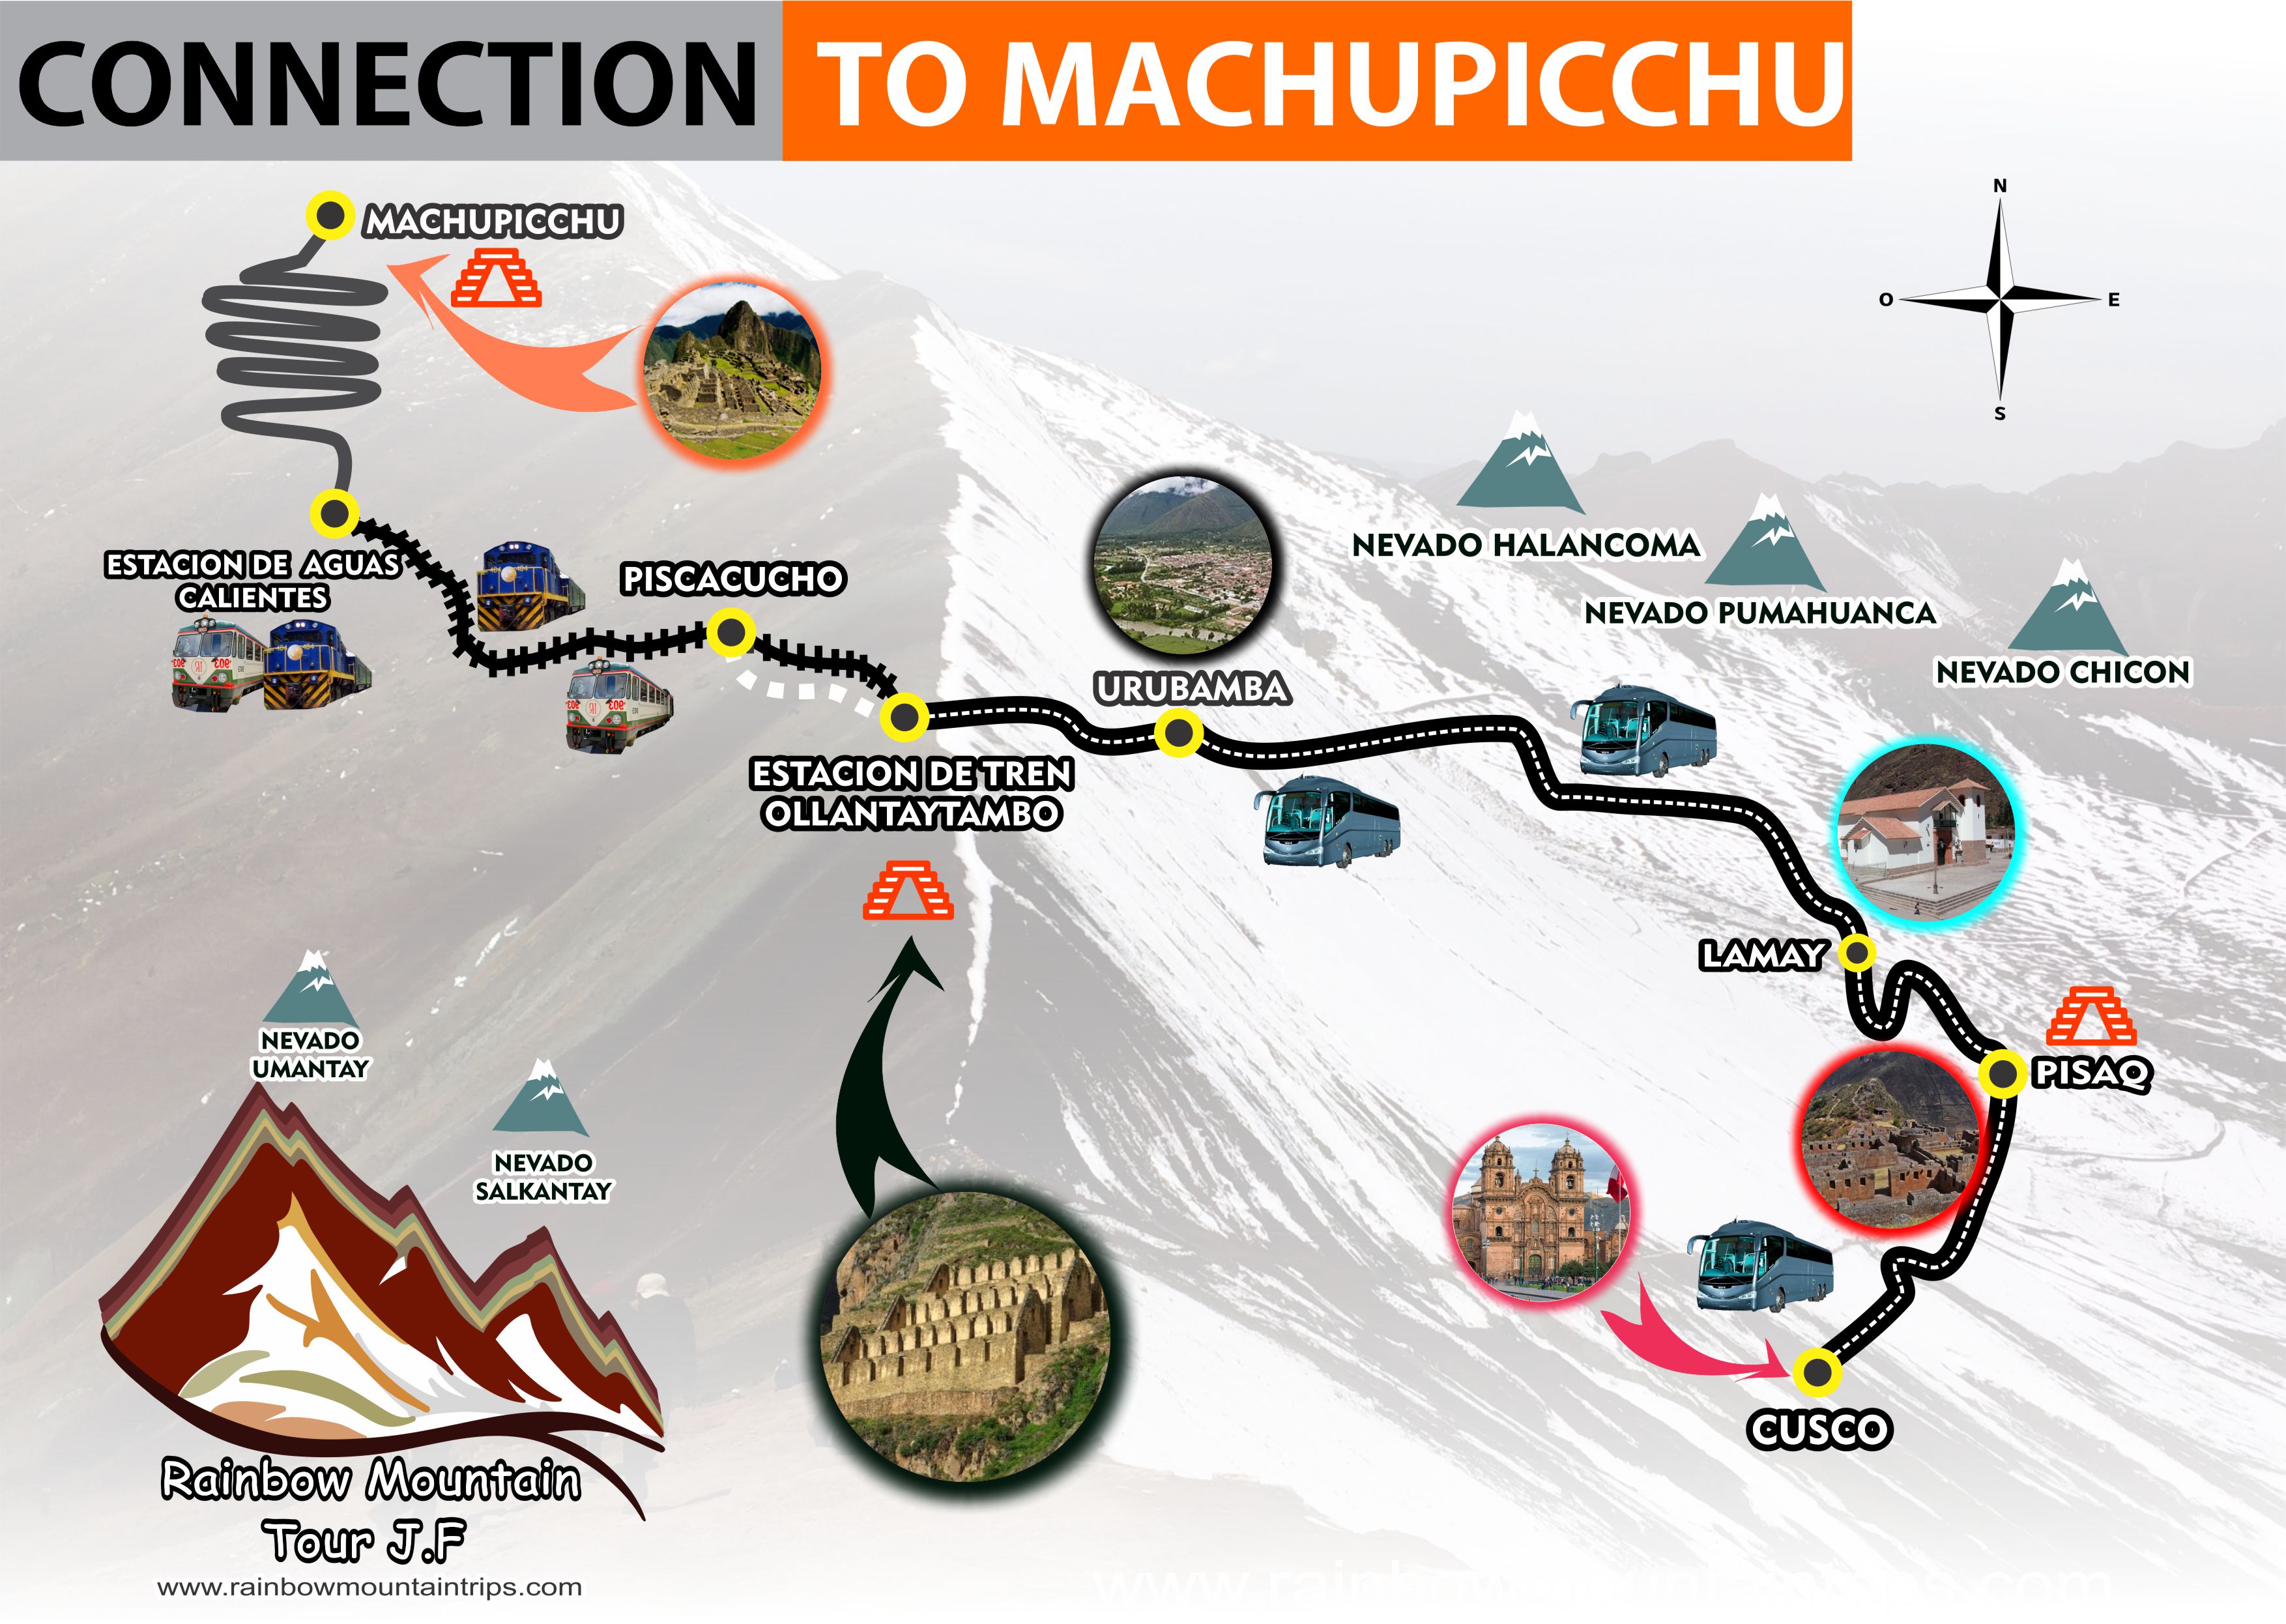 Conection to machupicchu